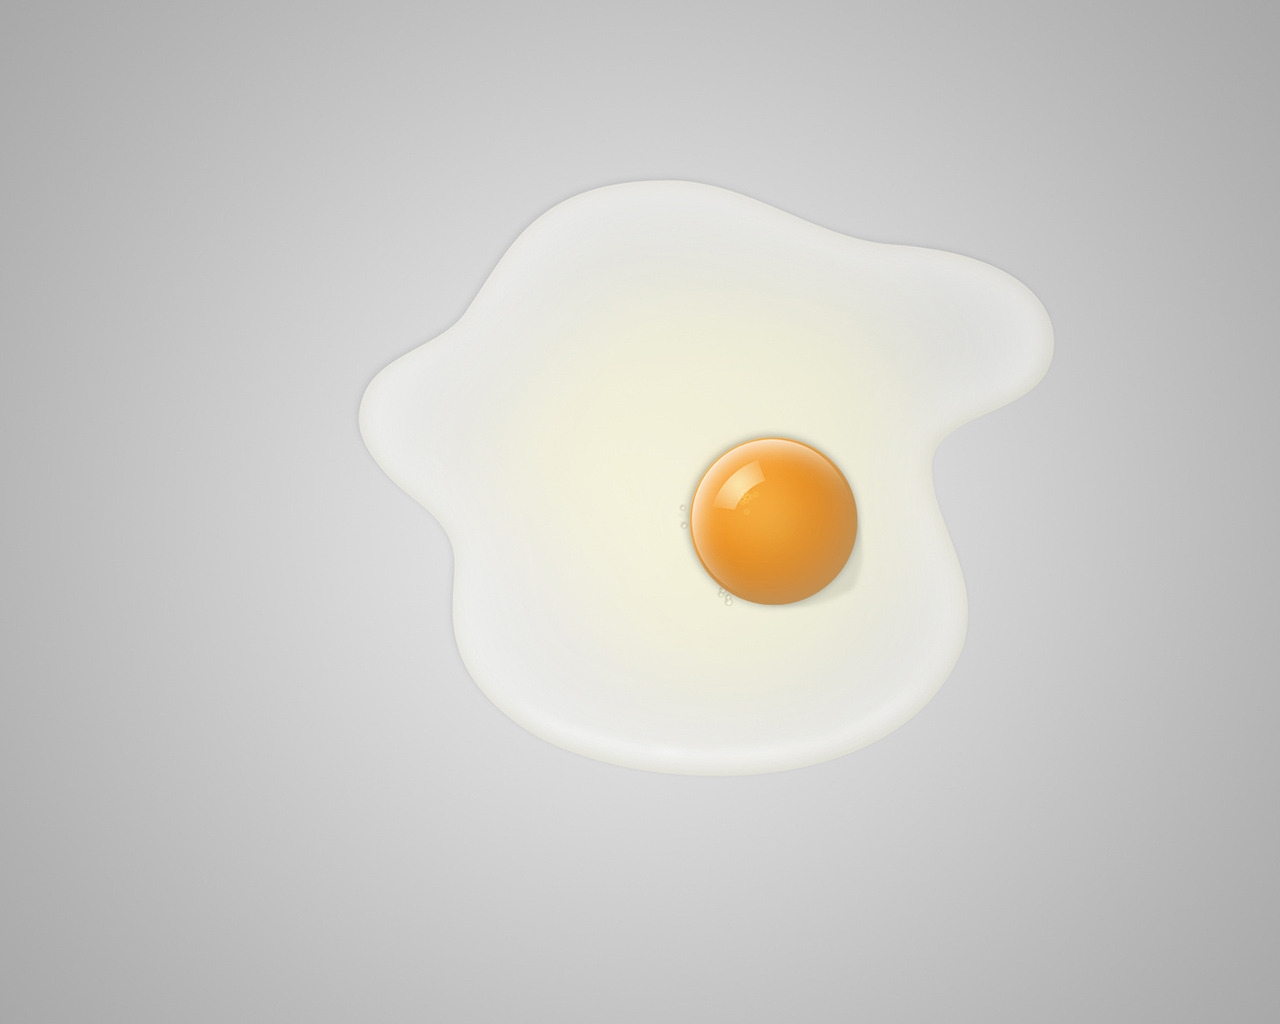 Minimal fried egg for 1280 x 1024 resolution